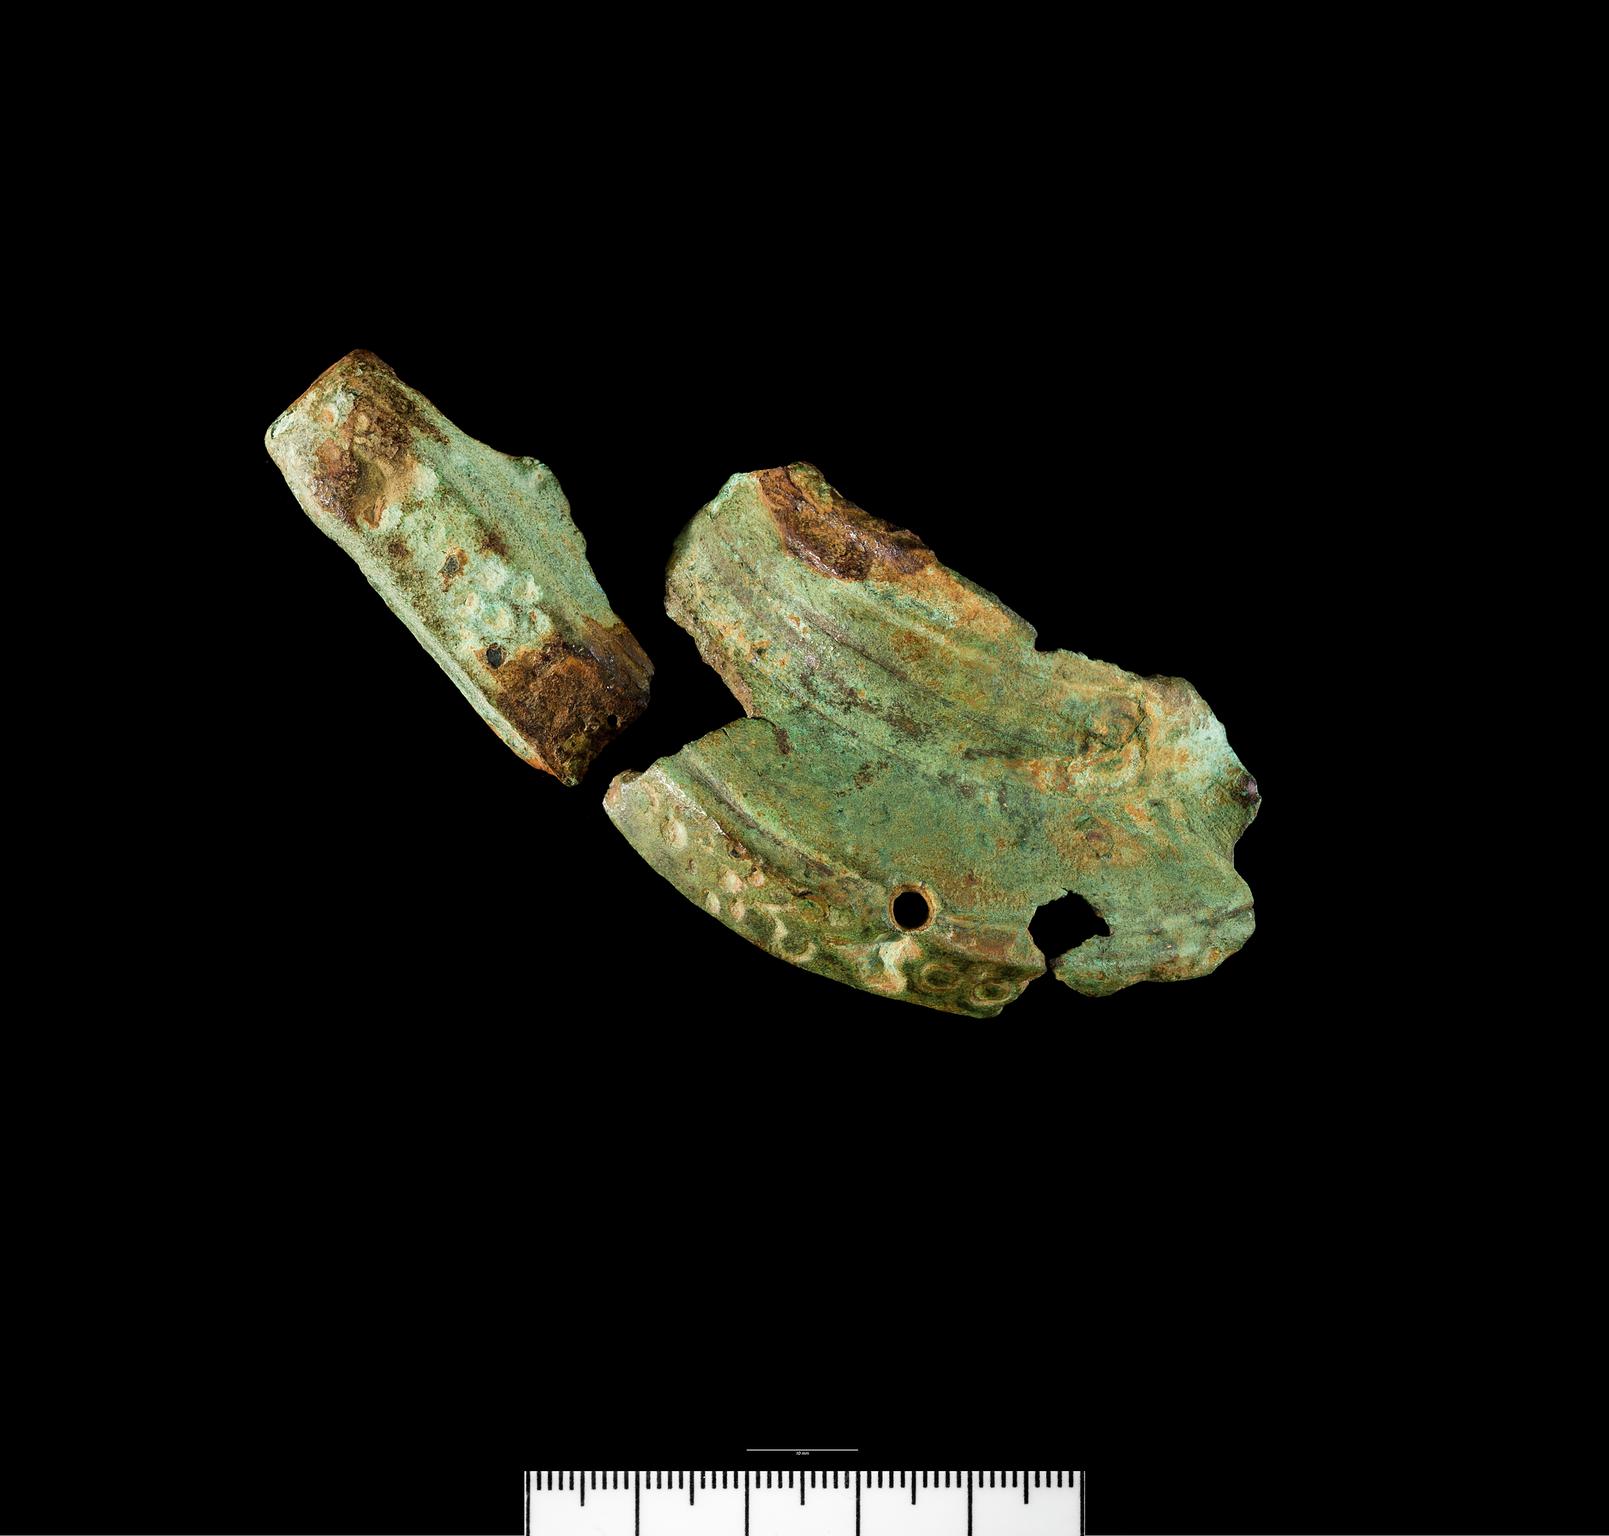 Roman copper alloy object